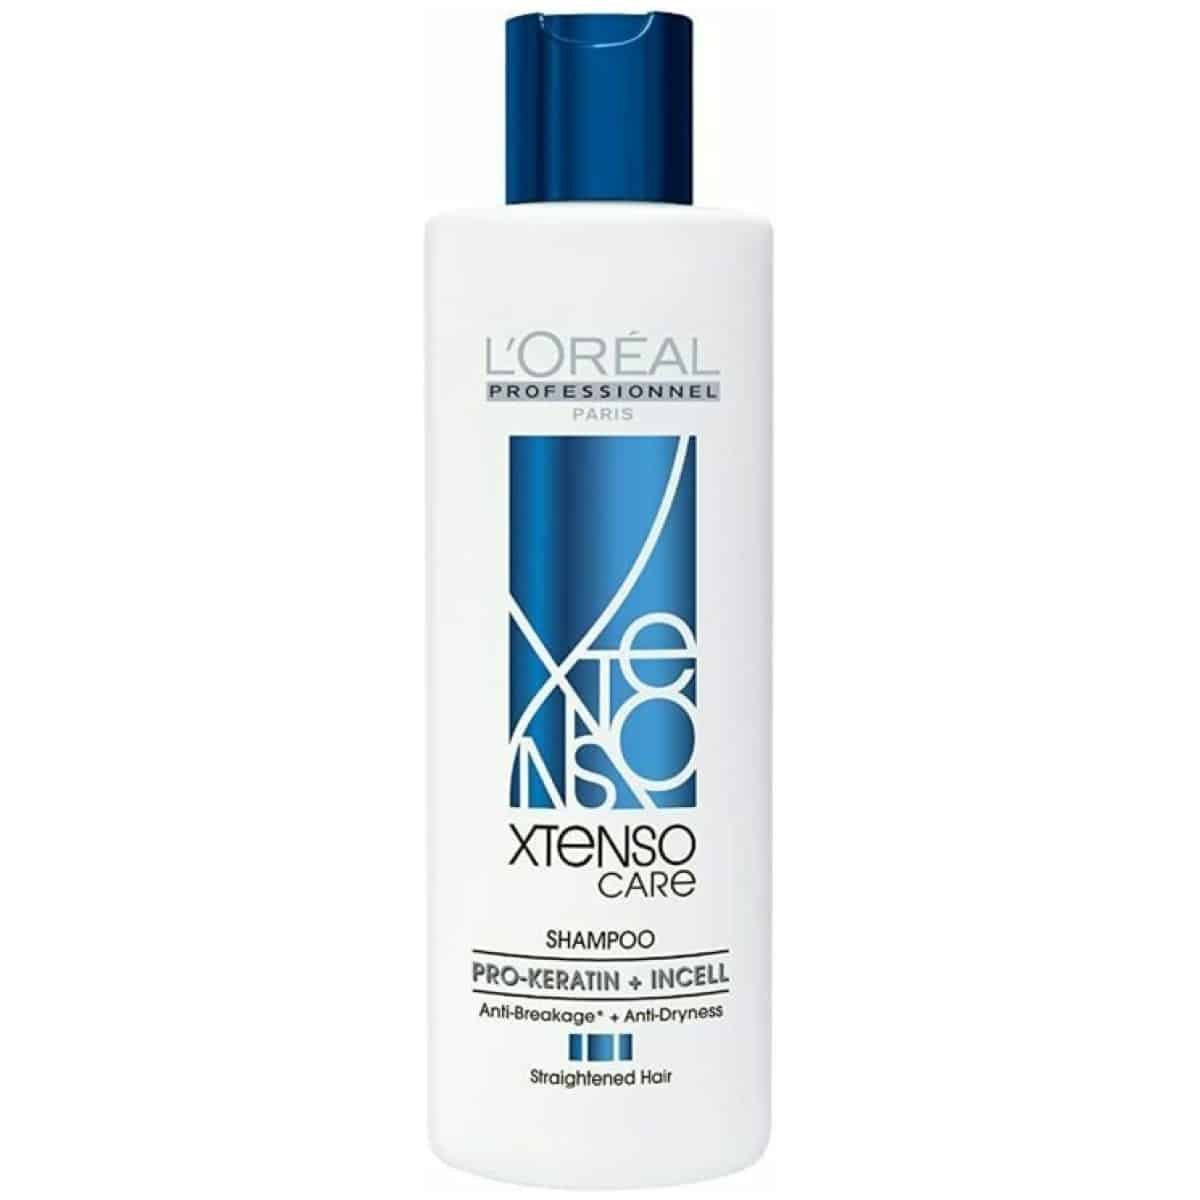 L'Oreal Professional Xtenso Care Pro Keratine Incell Shampoo 250ml